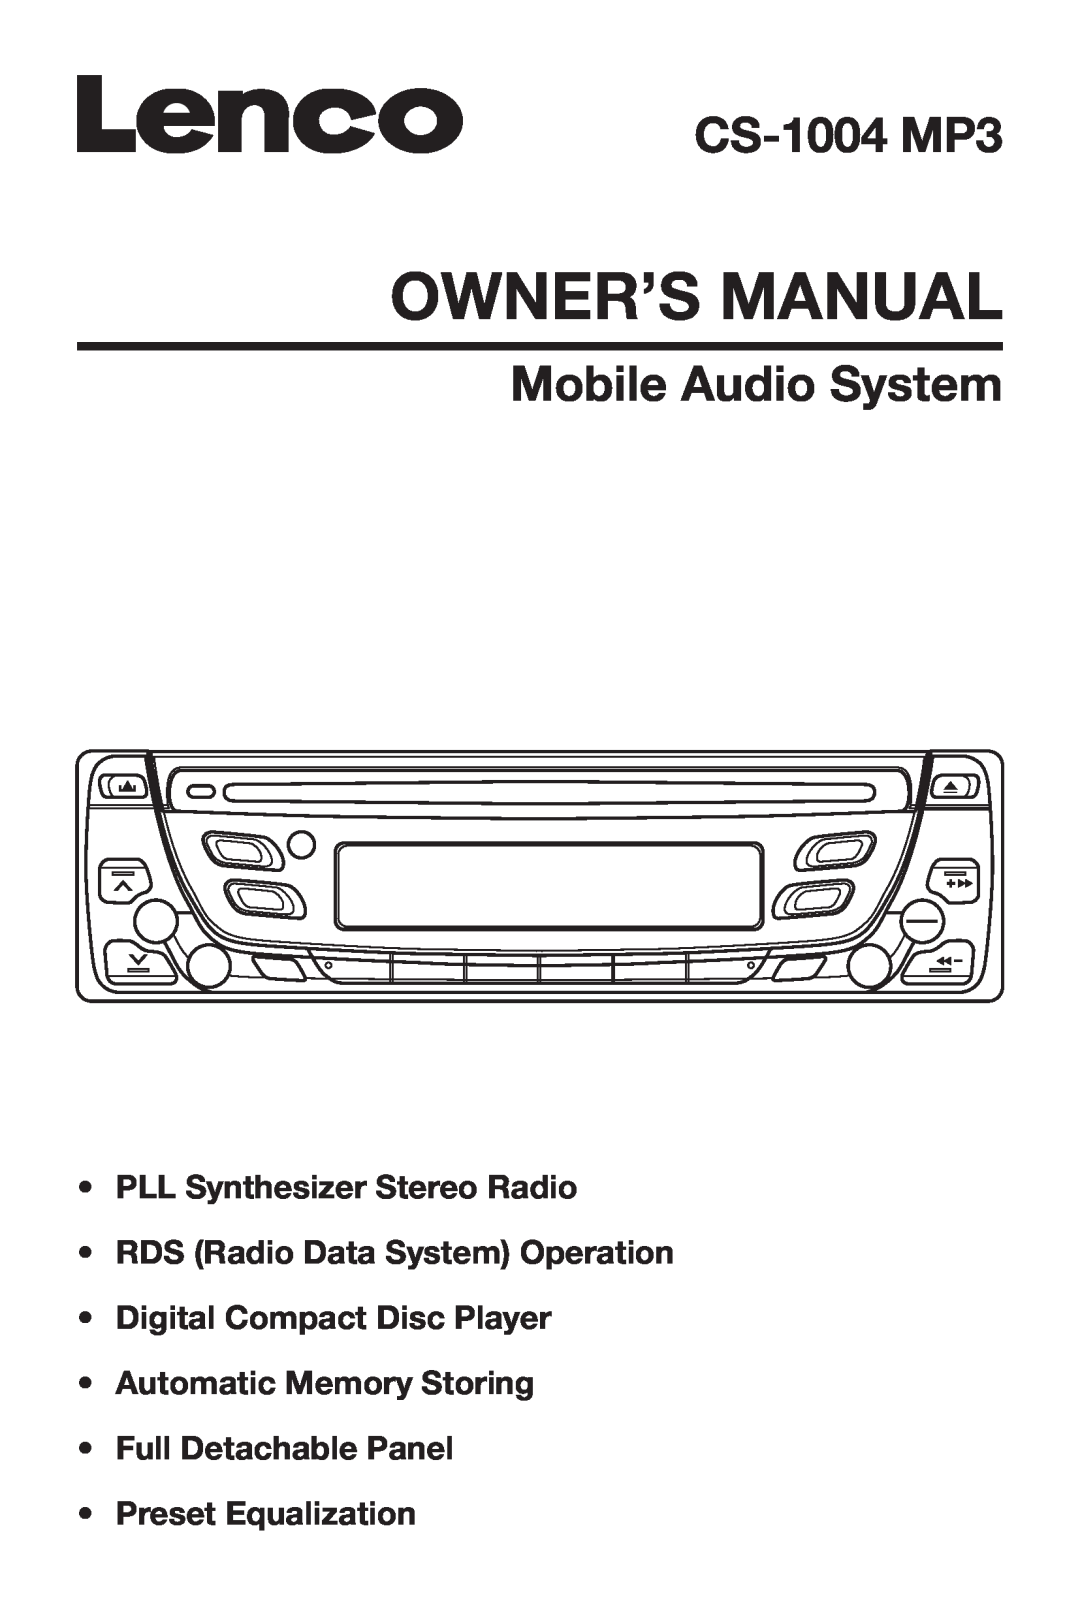 Lenco Marine CS-1004 owner manual PLL Synthesizer Stereo Radio, RDS Radio Data System Operation, Preset Equalization 